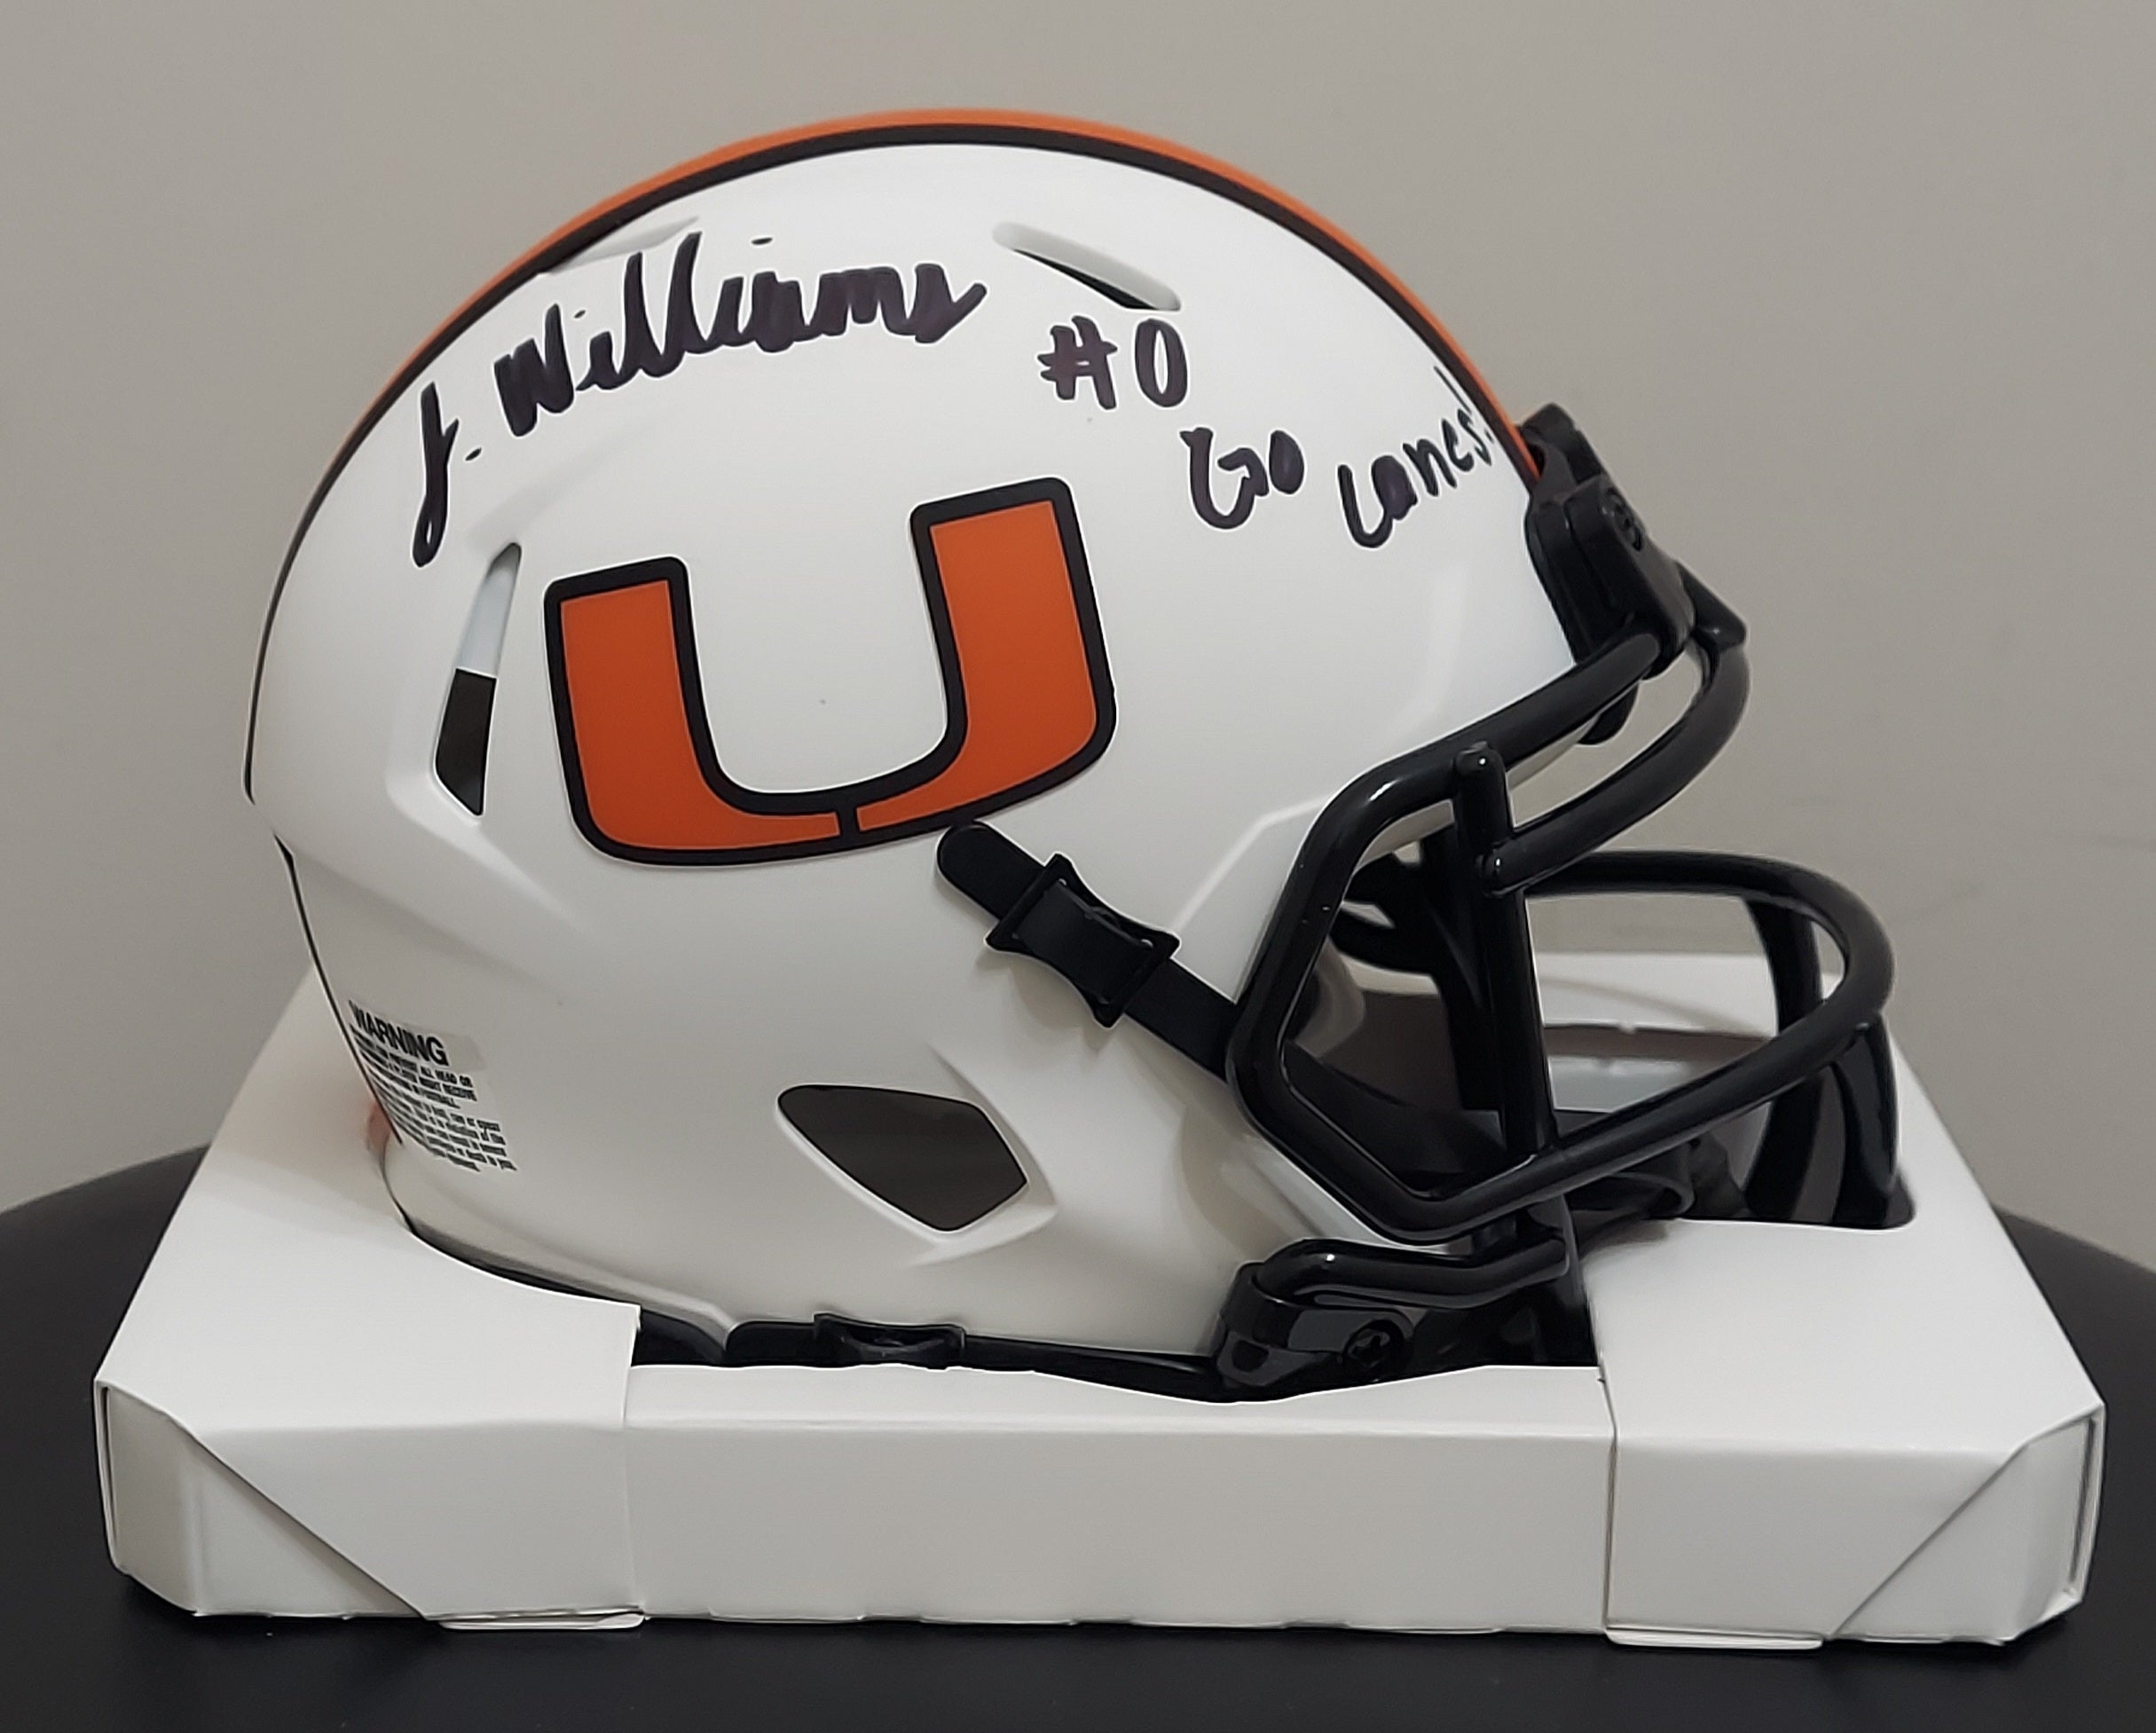 James Williams Autographed Mini Helmet - Lunar Eclipse White Helmet